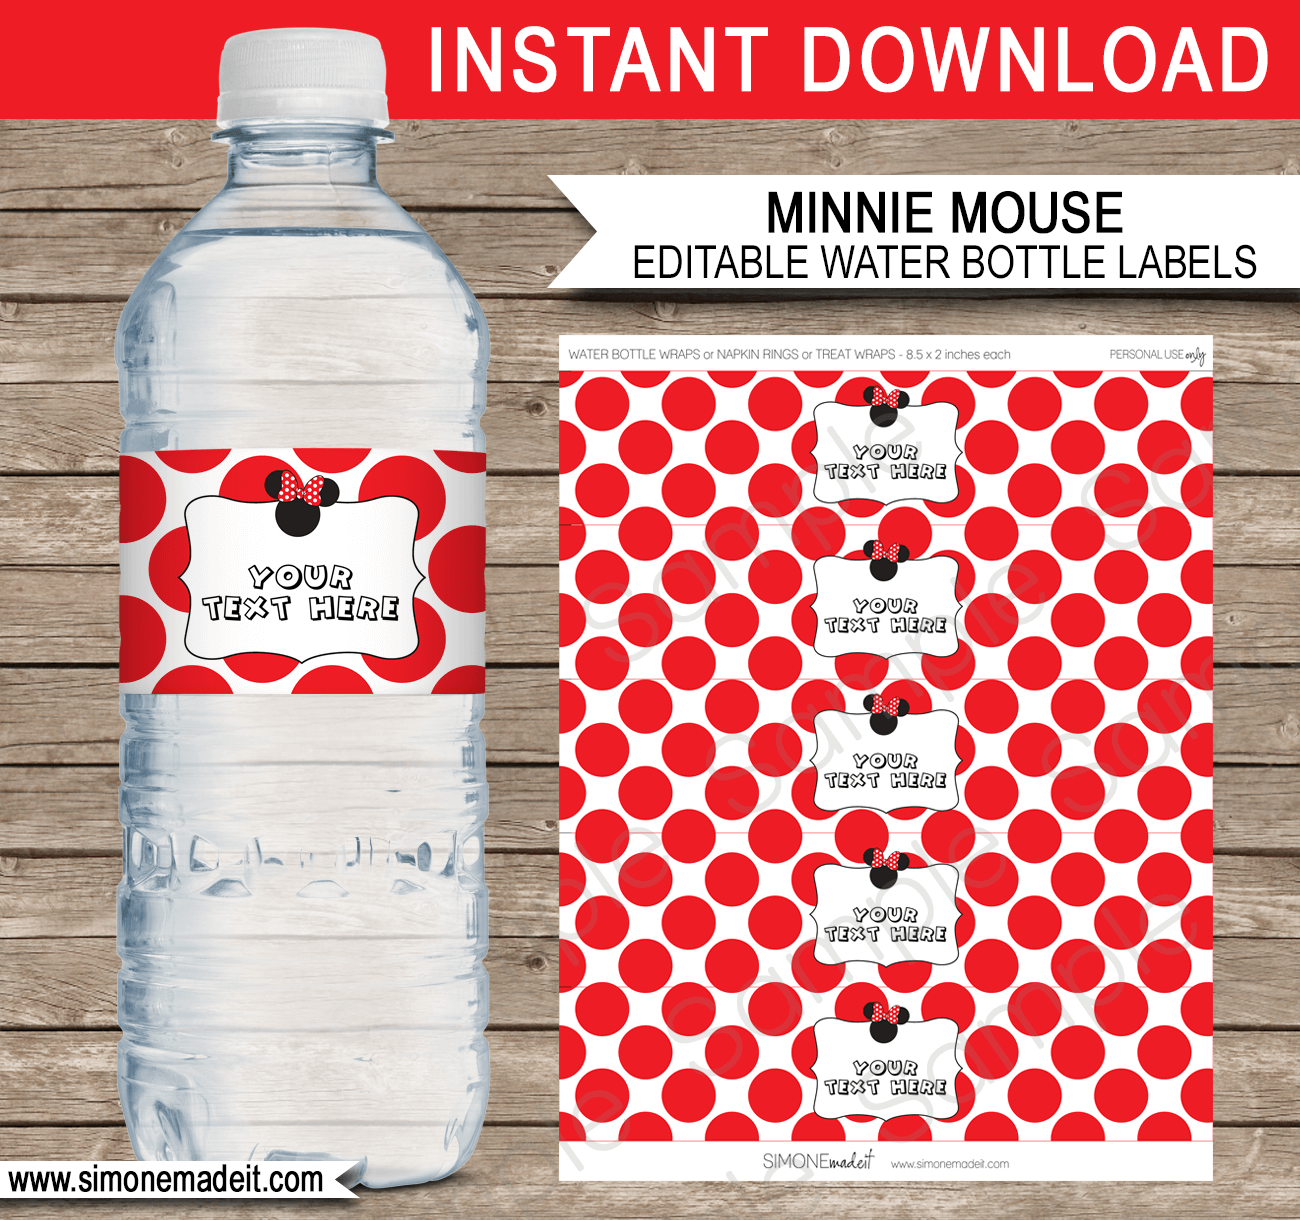 Minnie Mouse Theme Water Bottle Labels | Minnie Mouse Birthday Party | Napkin Wraps | Treat Wraps | DIY Editable Template | INSTANT DOWNLOAD via simonemadeit.com